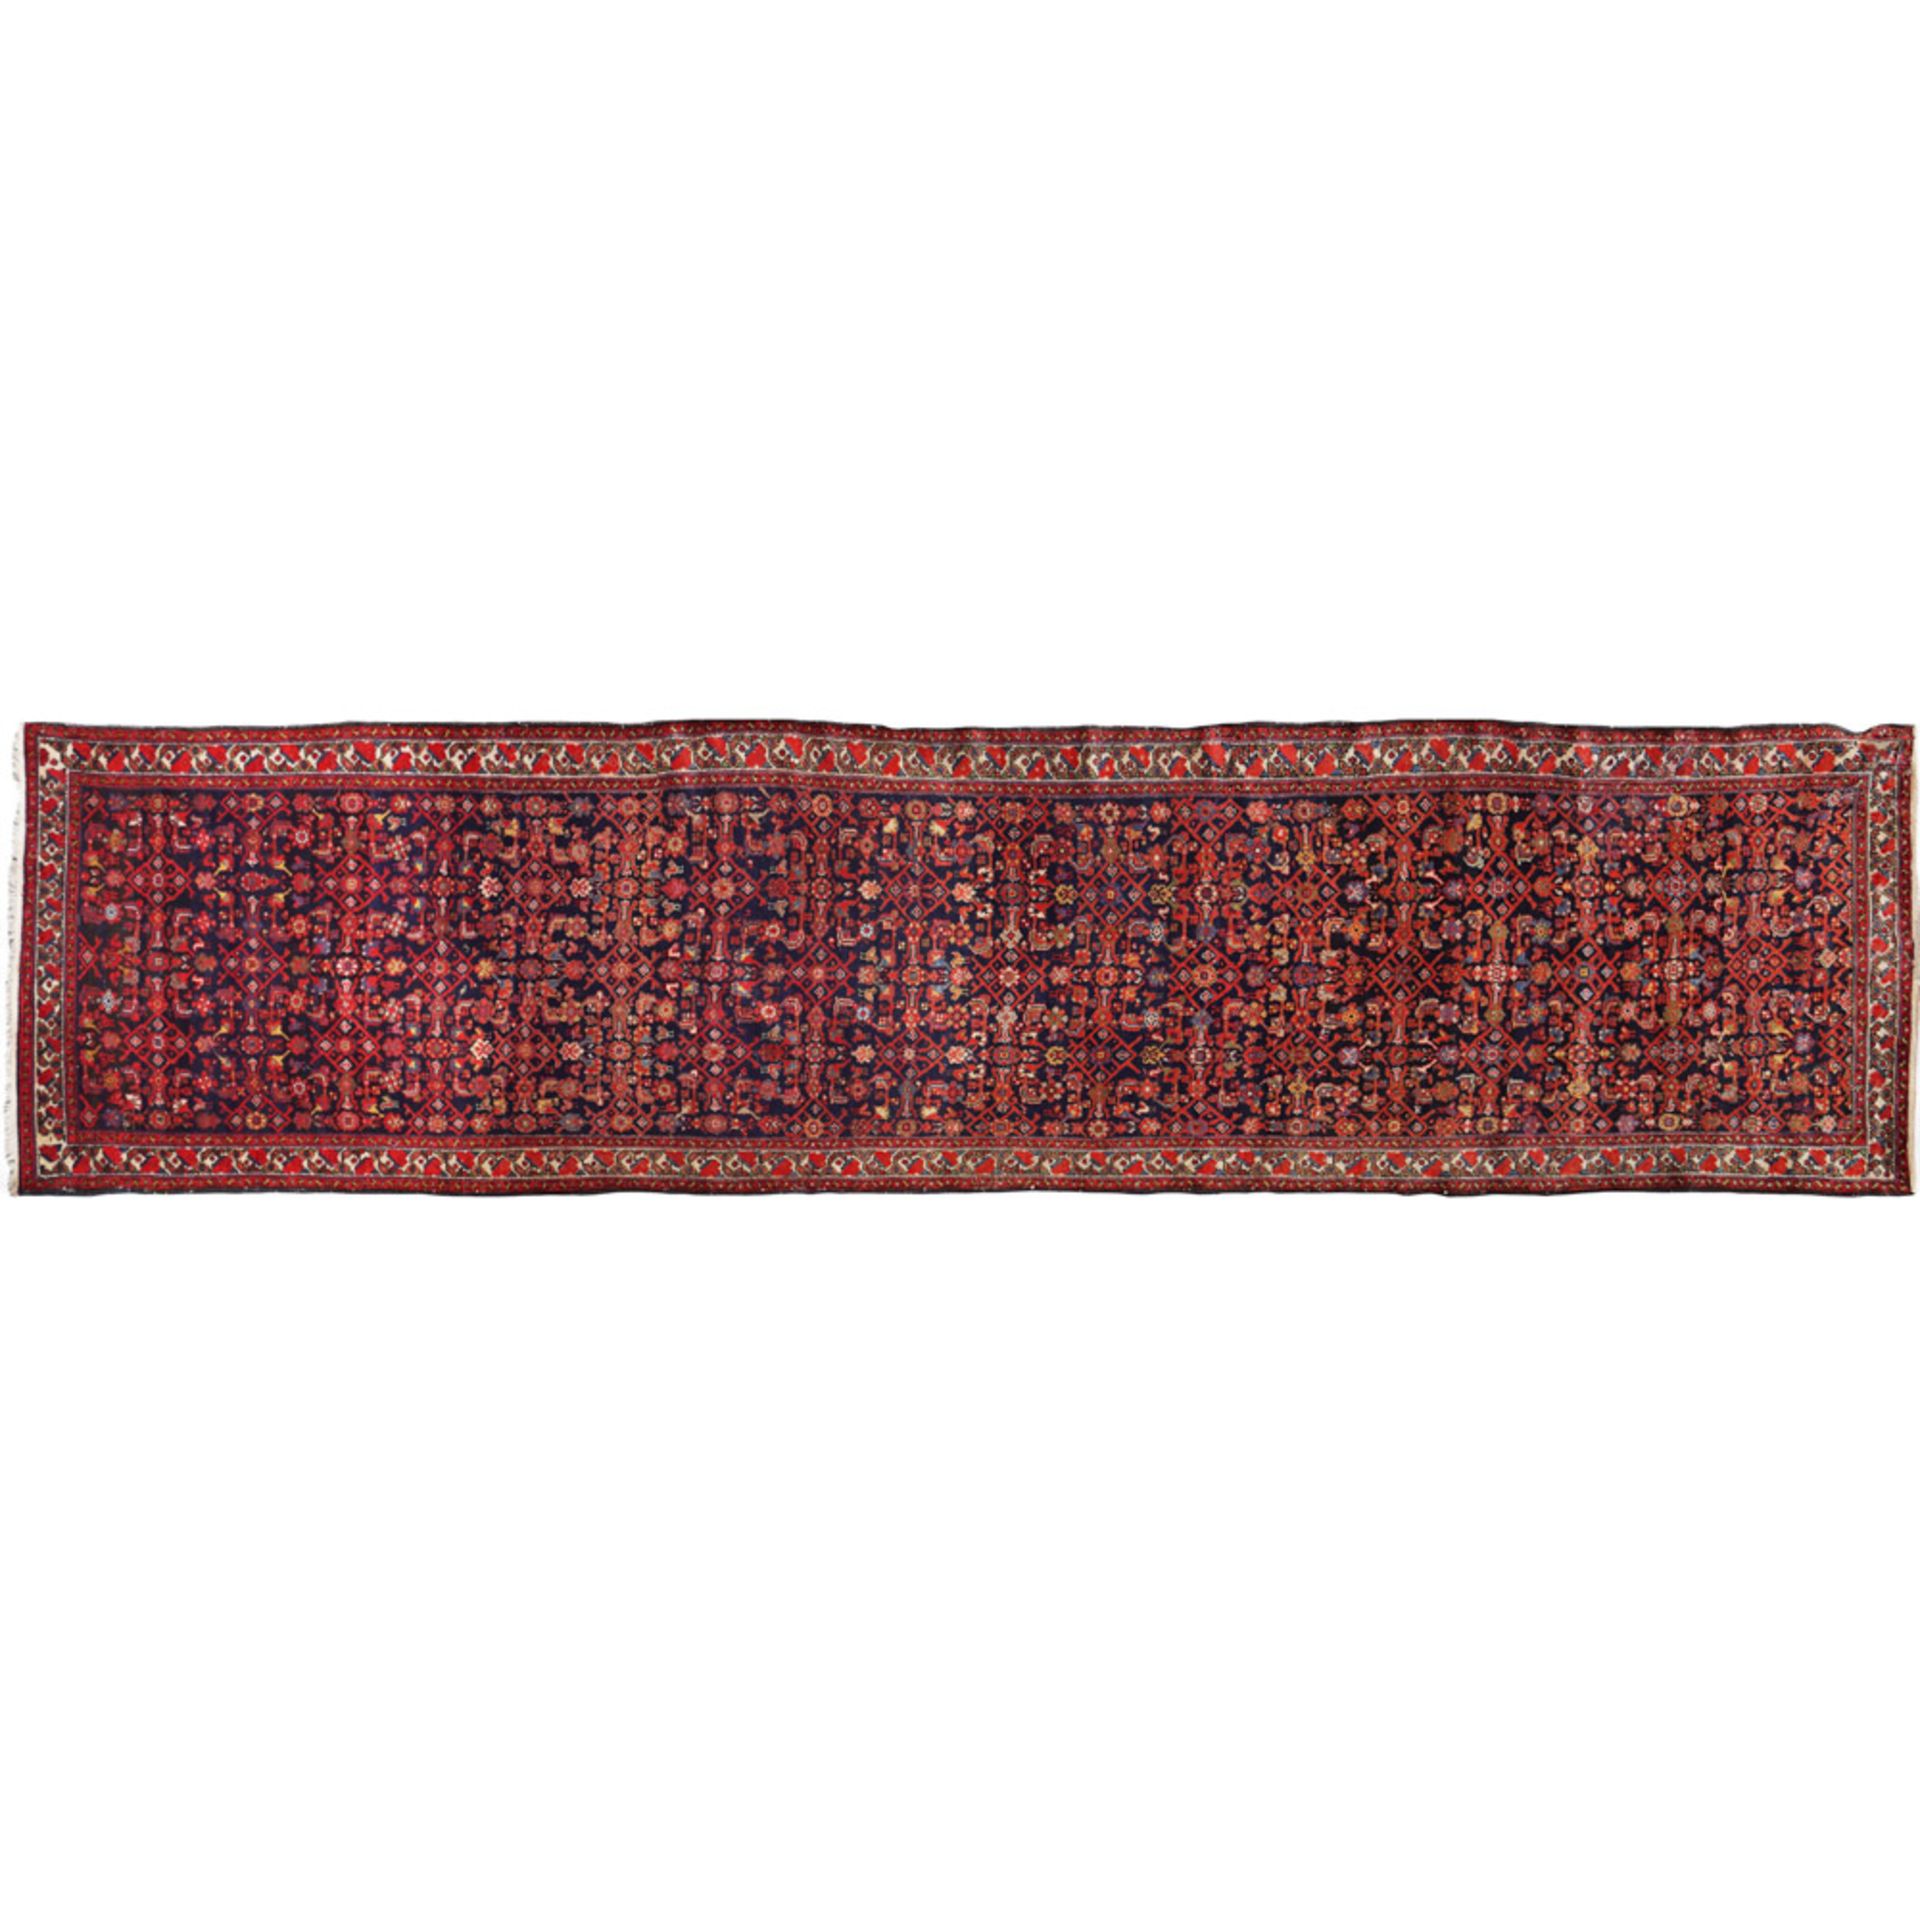 Ferahan carpet Persia, early 20th century 482x110 cm.